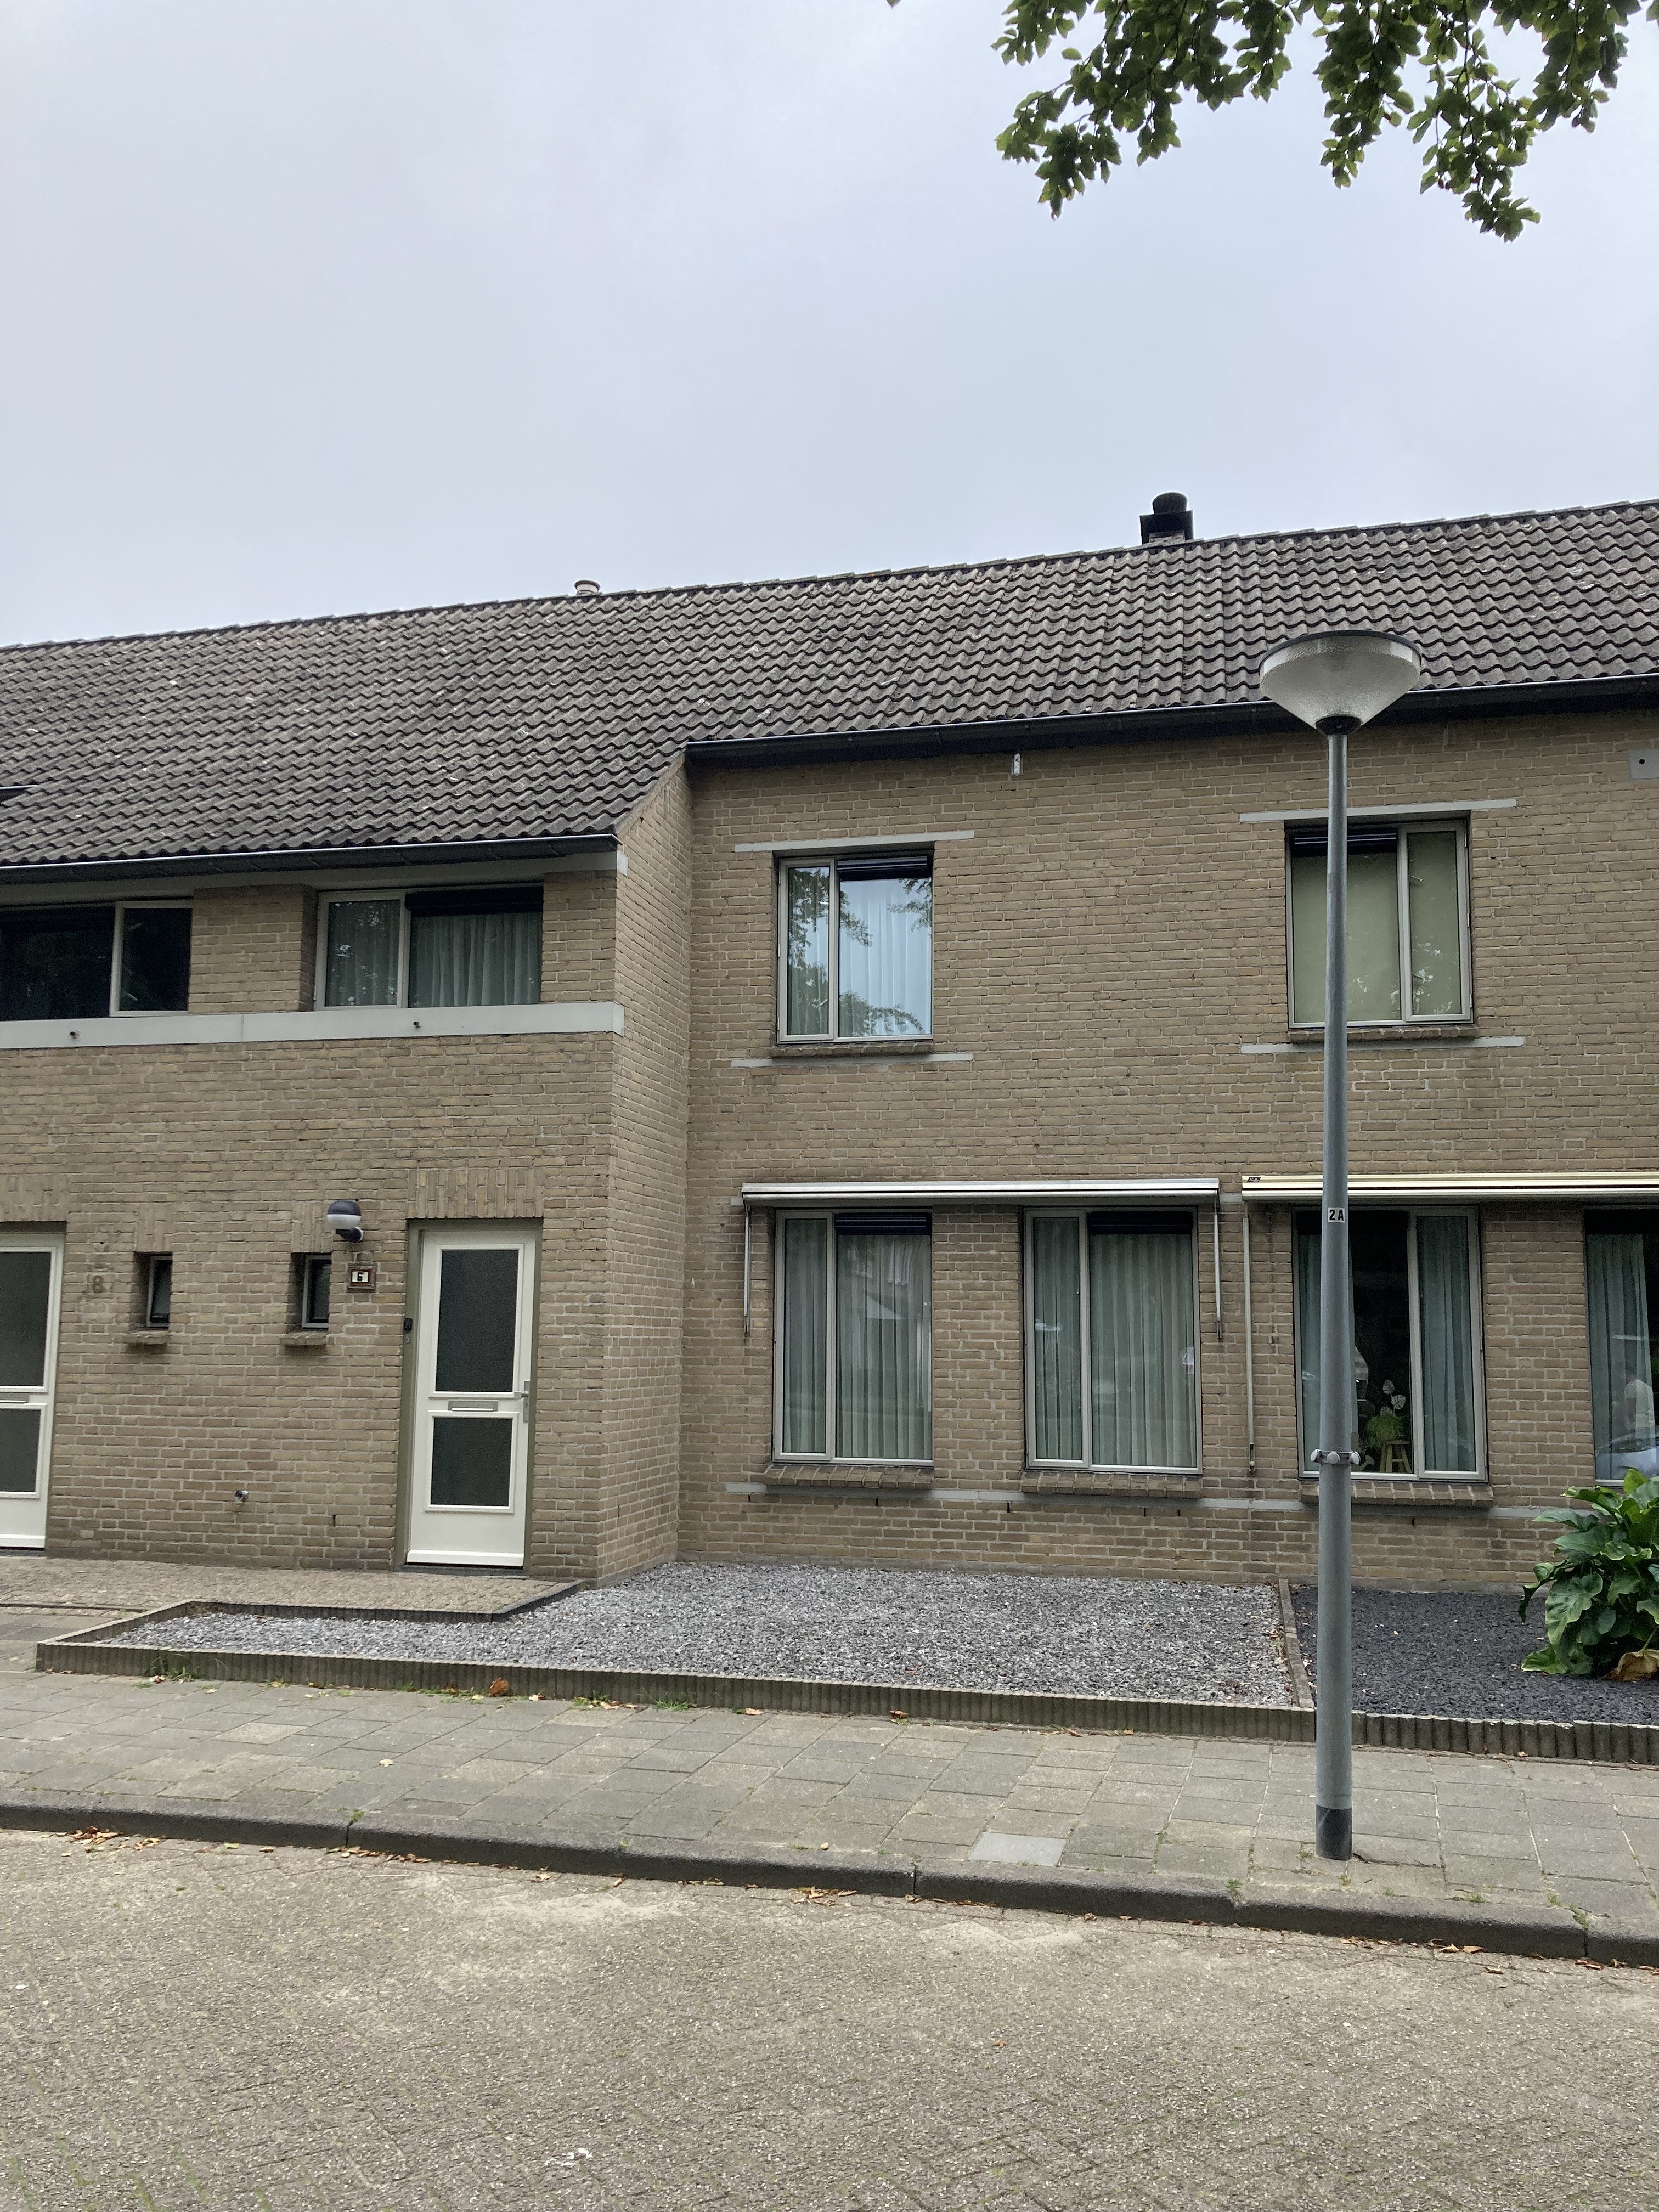 Pannenschuurlaan 6, 5061 DS Oisterwijk, Nederland